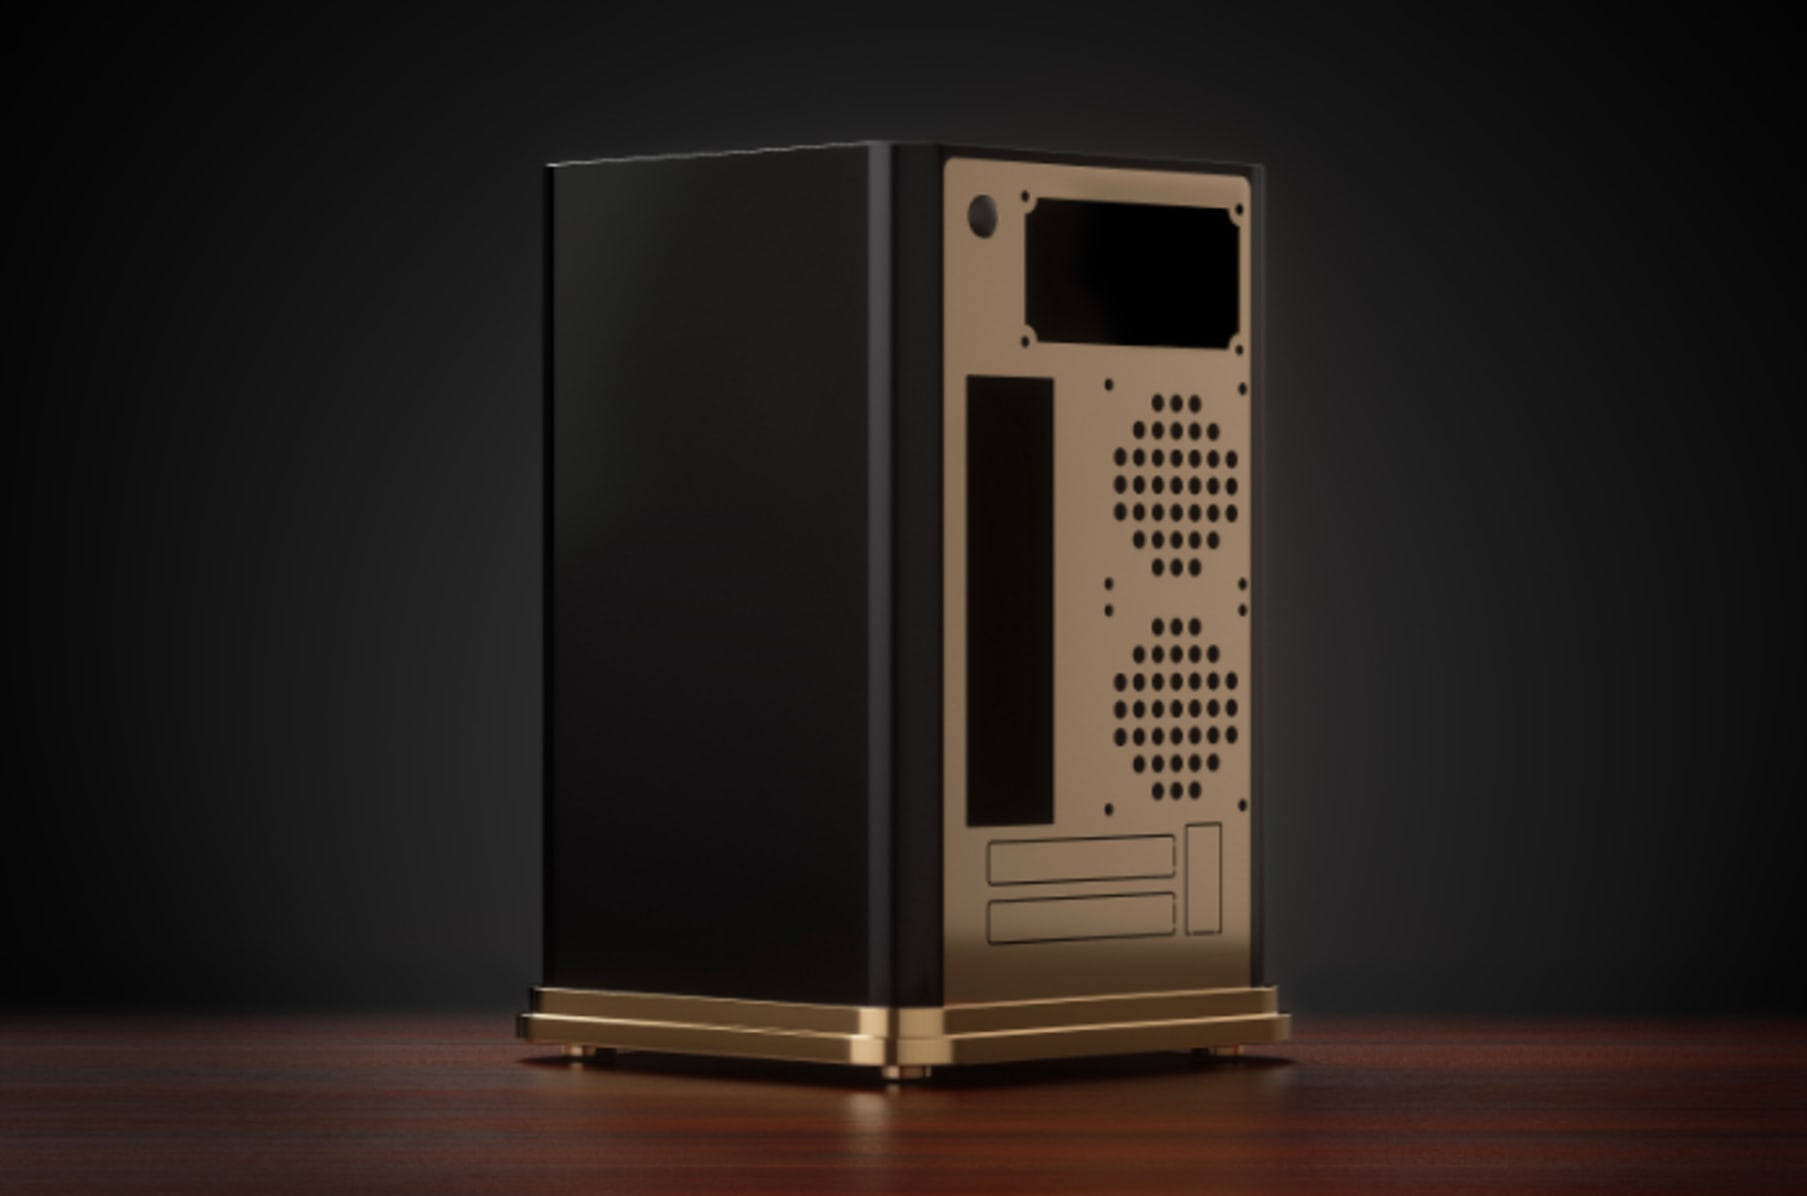 ArtekLux - mini ITX PC case - prototype | Indiegogo